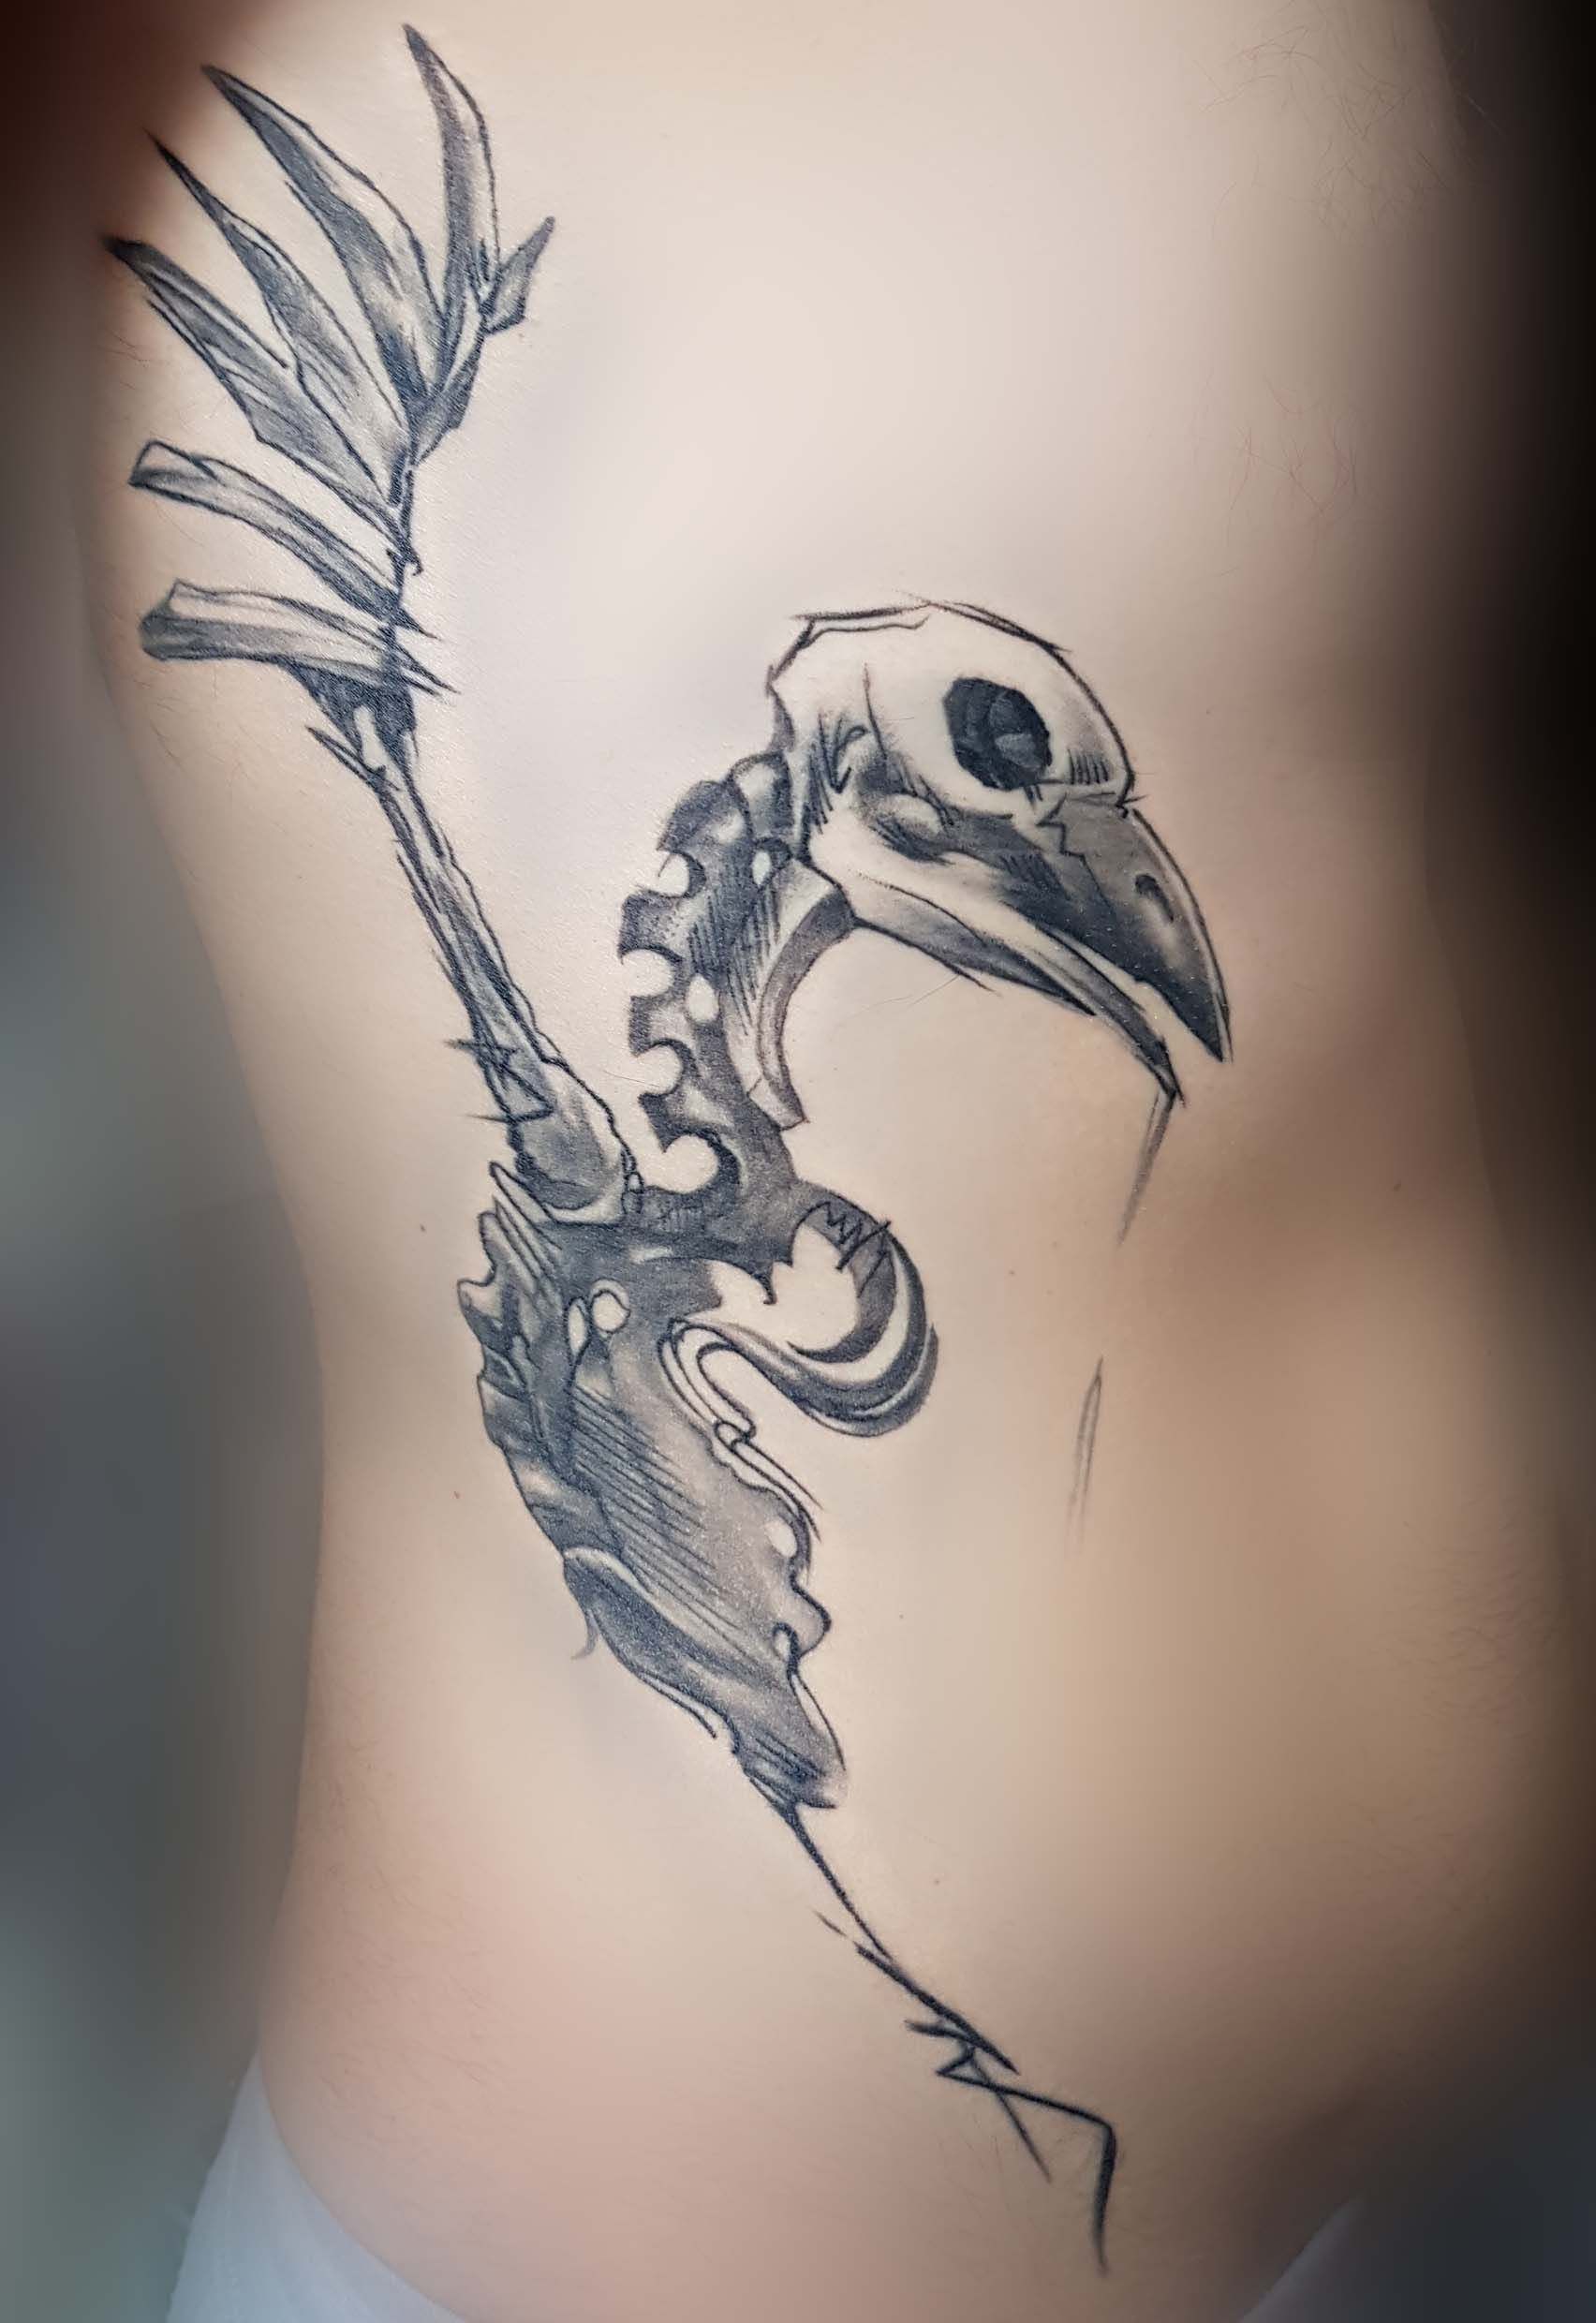 Scetch Style Tattoo Bird Tattoo Bird Skull Bird Bone Sketch Style within size 1704 X 2480